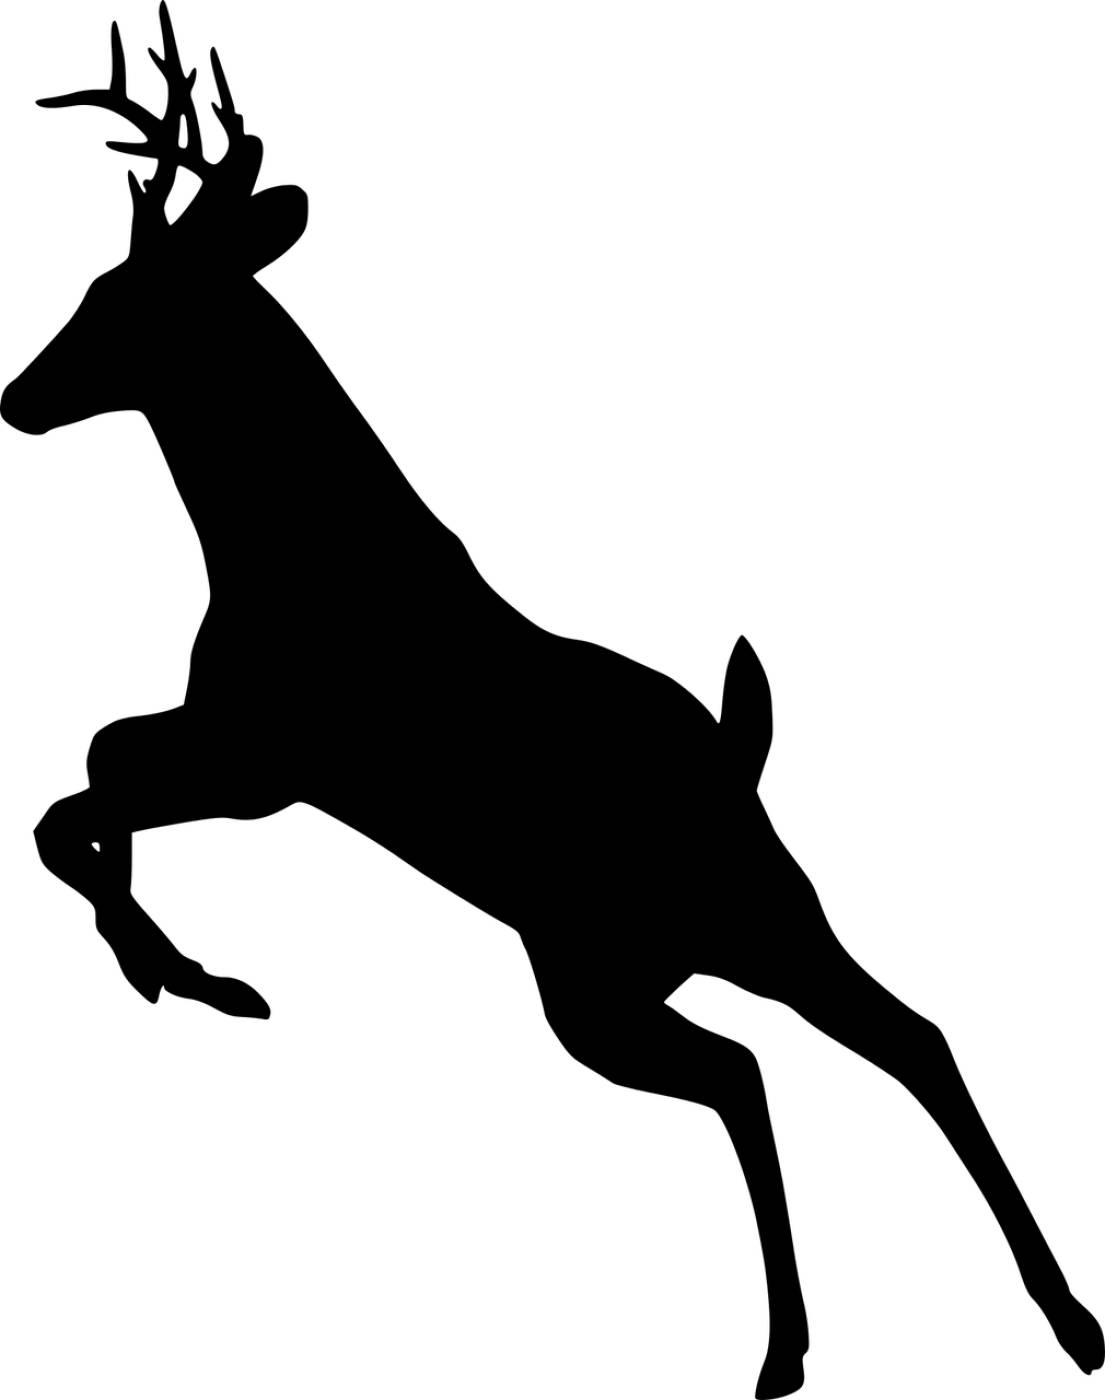 deer jumping silhouette animal  svg vector